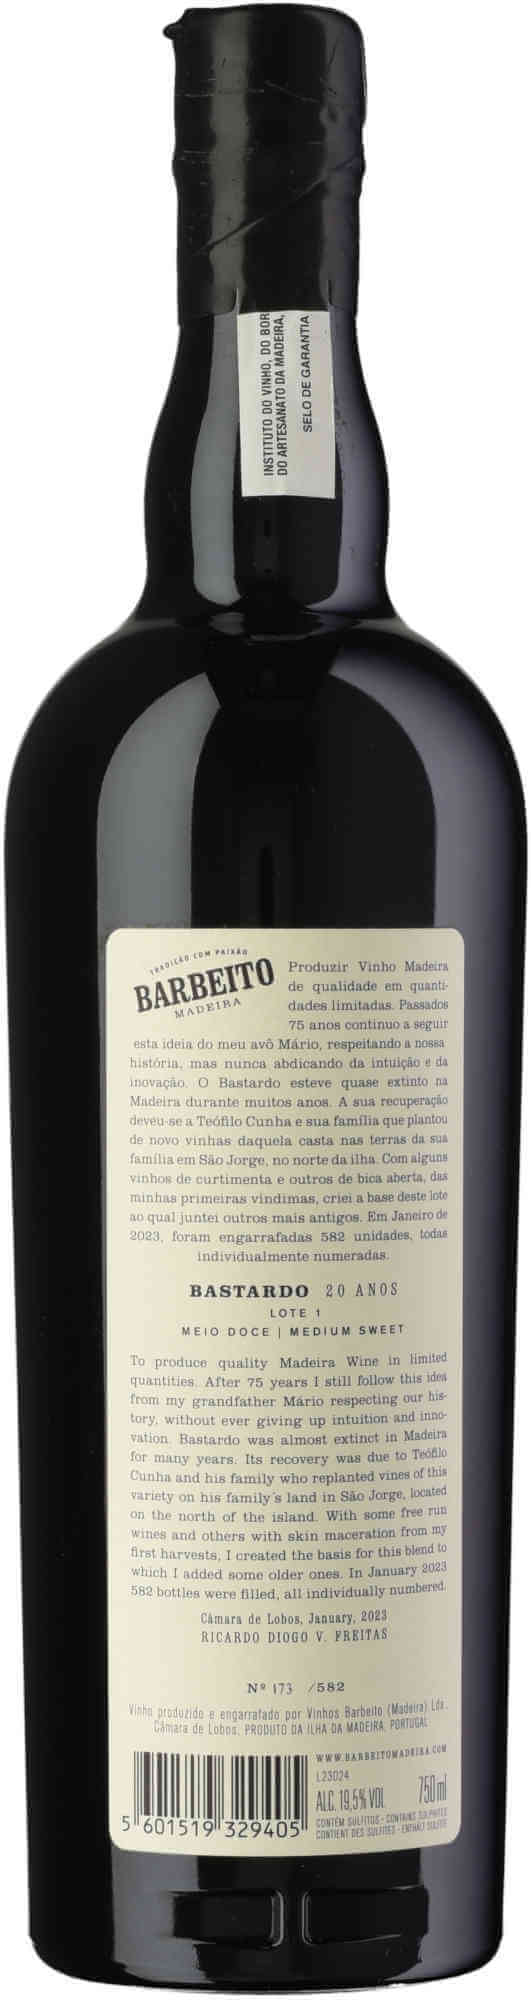 Barbeito-20-Years-Bastardo-back